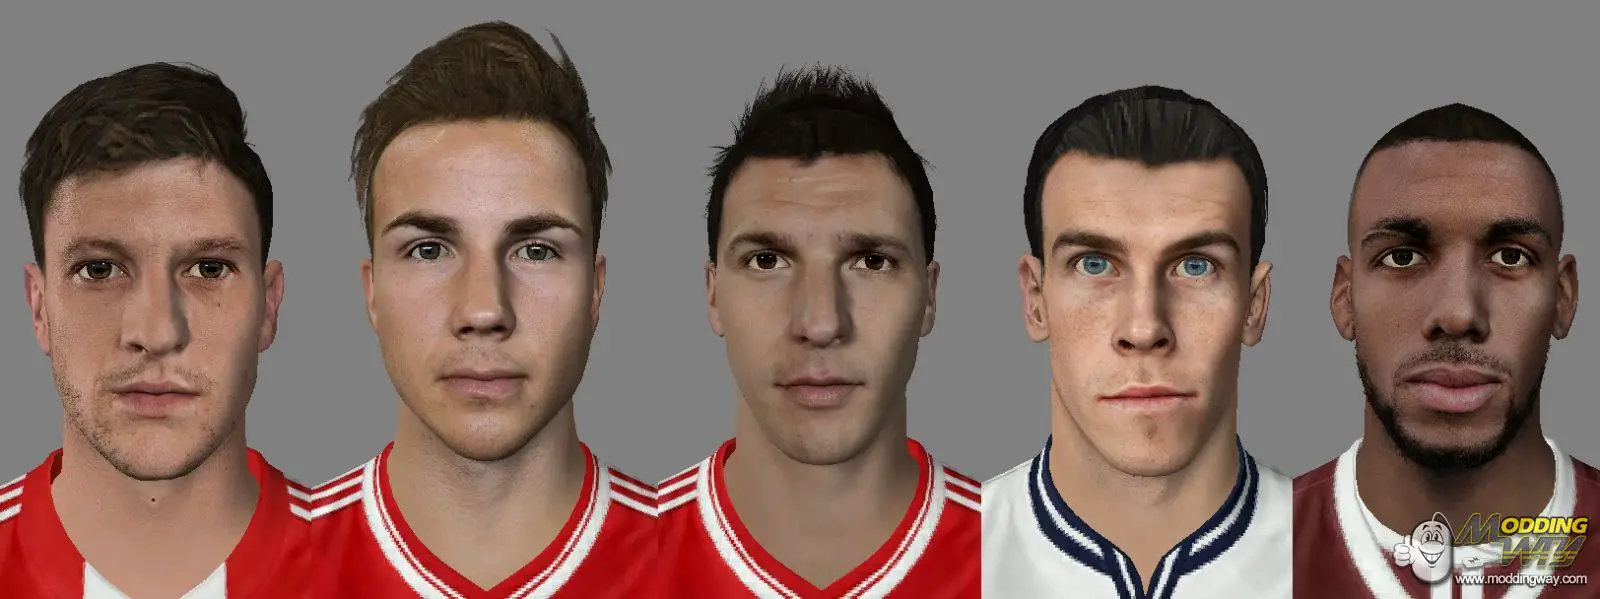 Fifa 14 patch. FIFA 12 игроки с лицом. FIFA 14 Arnold face. Zinchenko FIFA 14 face. Зырянов FIFA face.